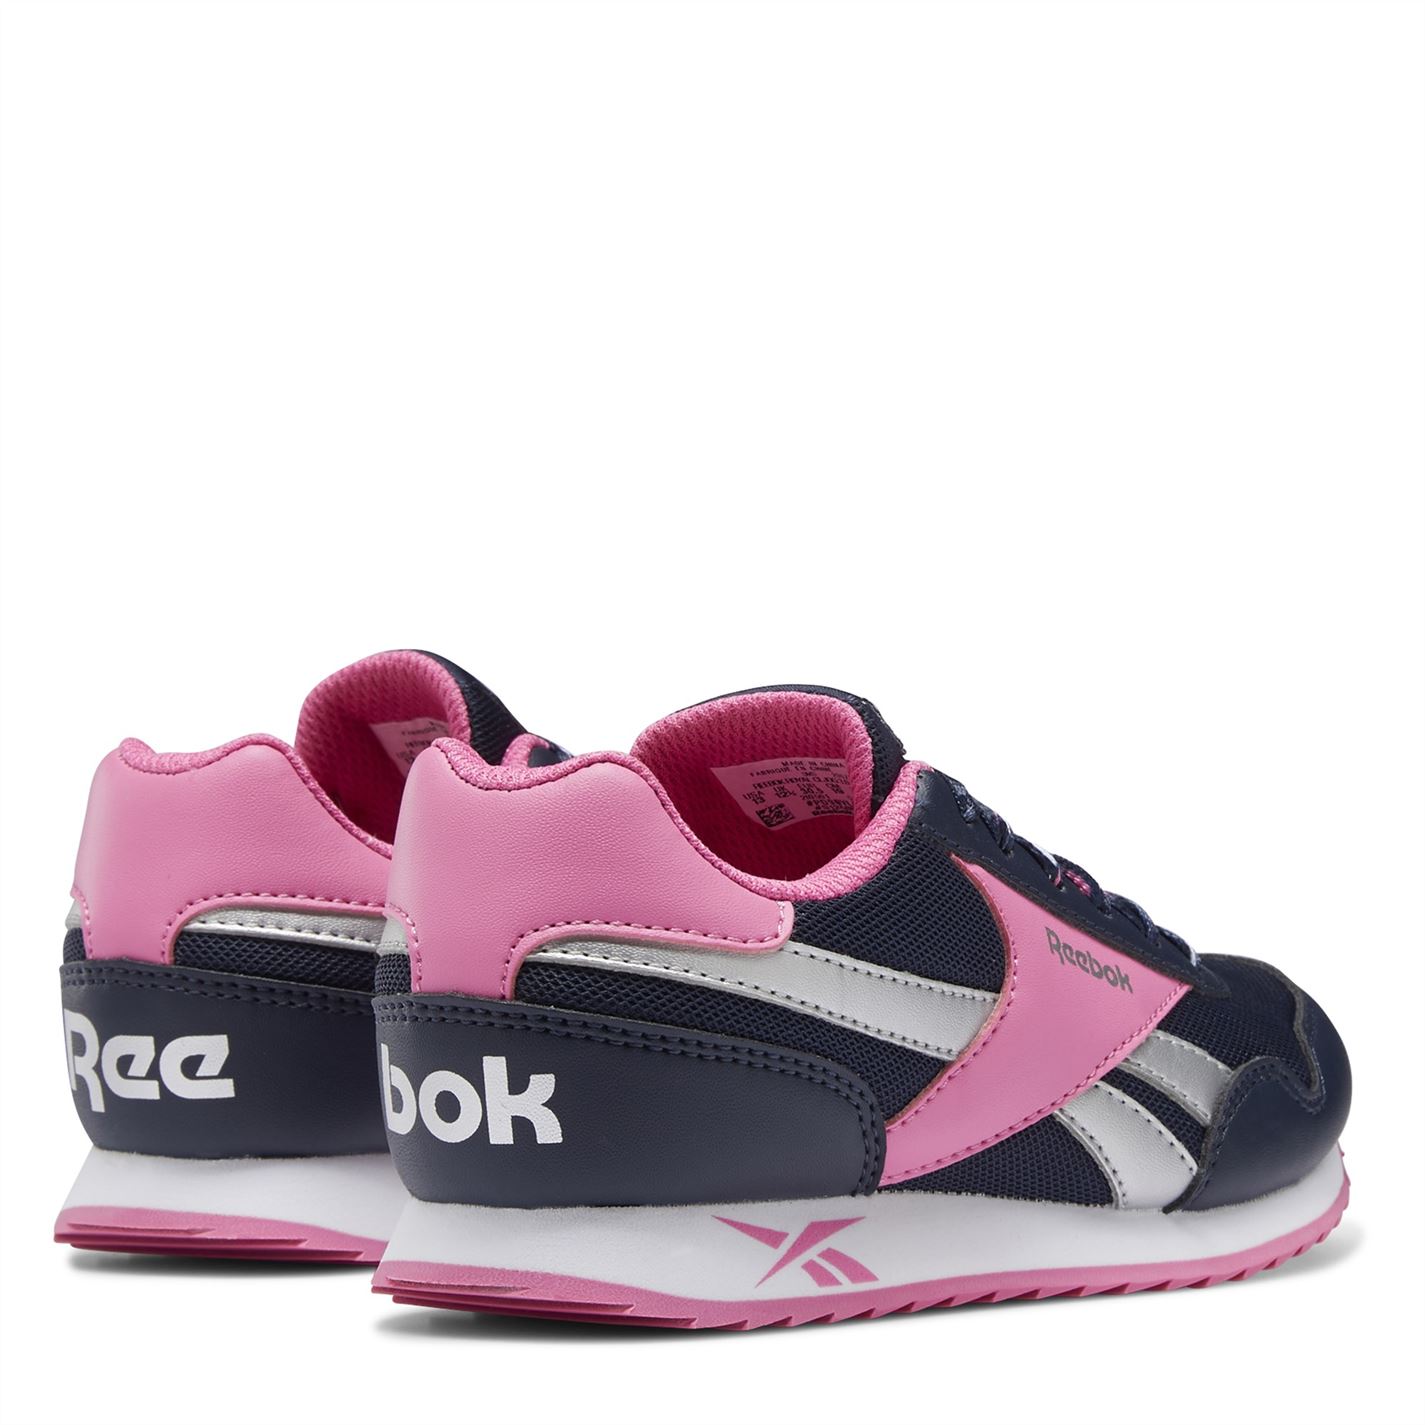 Adidasi sport Reebok Jogger RS pentru copii Fete bleumarin roz